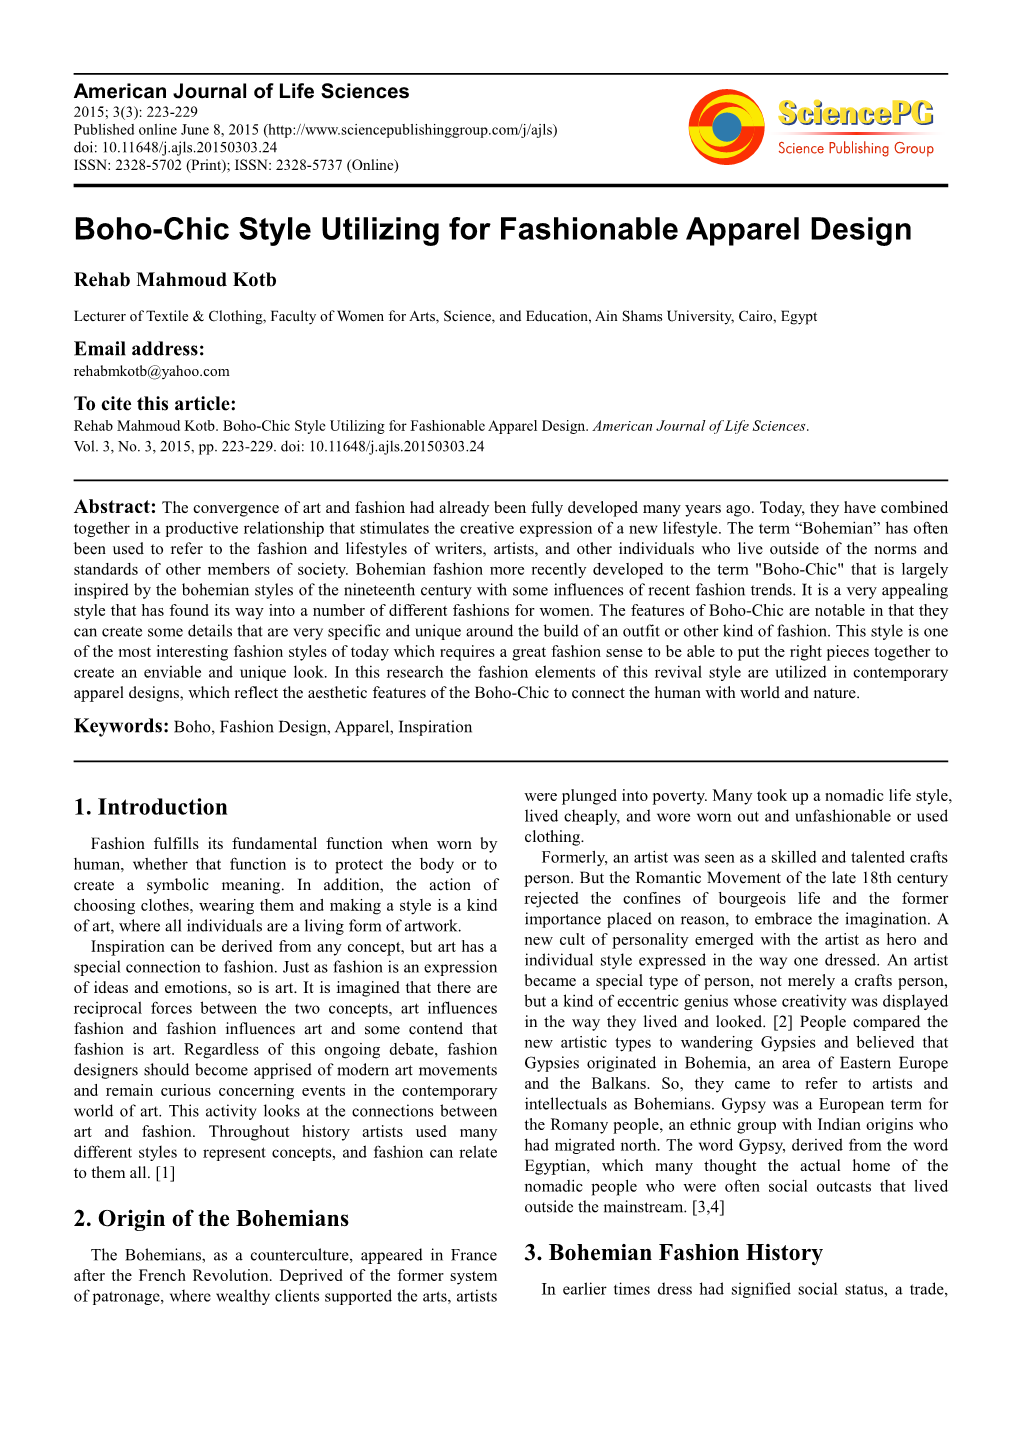 Boho-Chic Style Utilizing for Fashionable Apparel Design